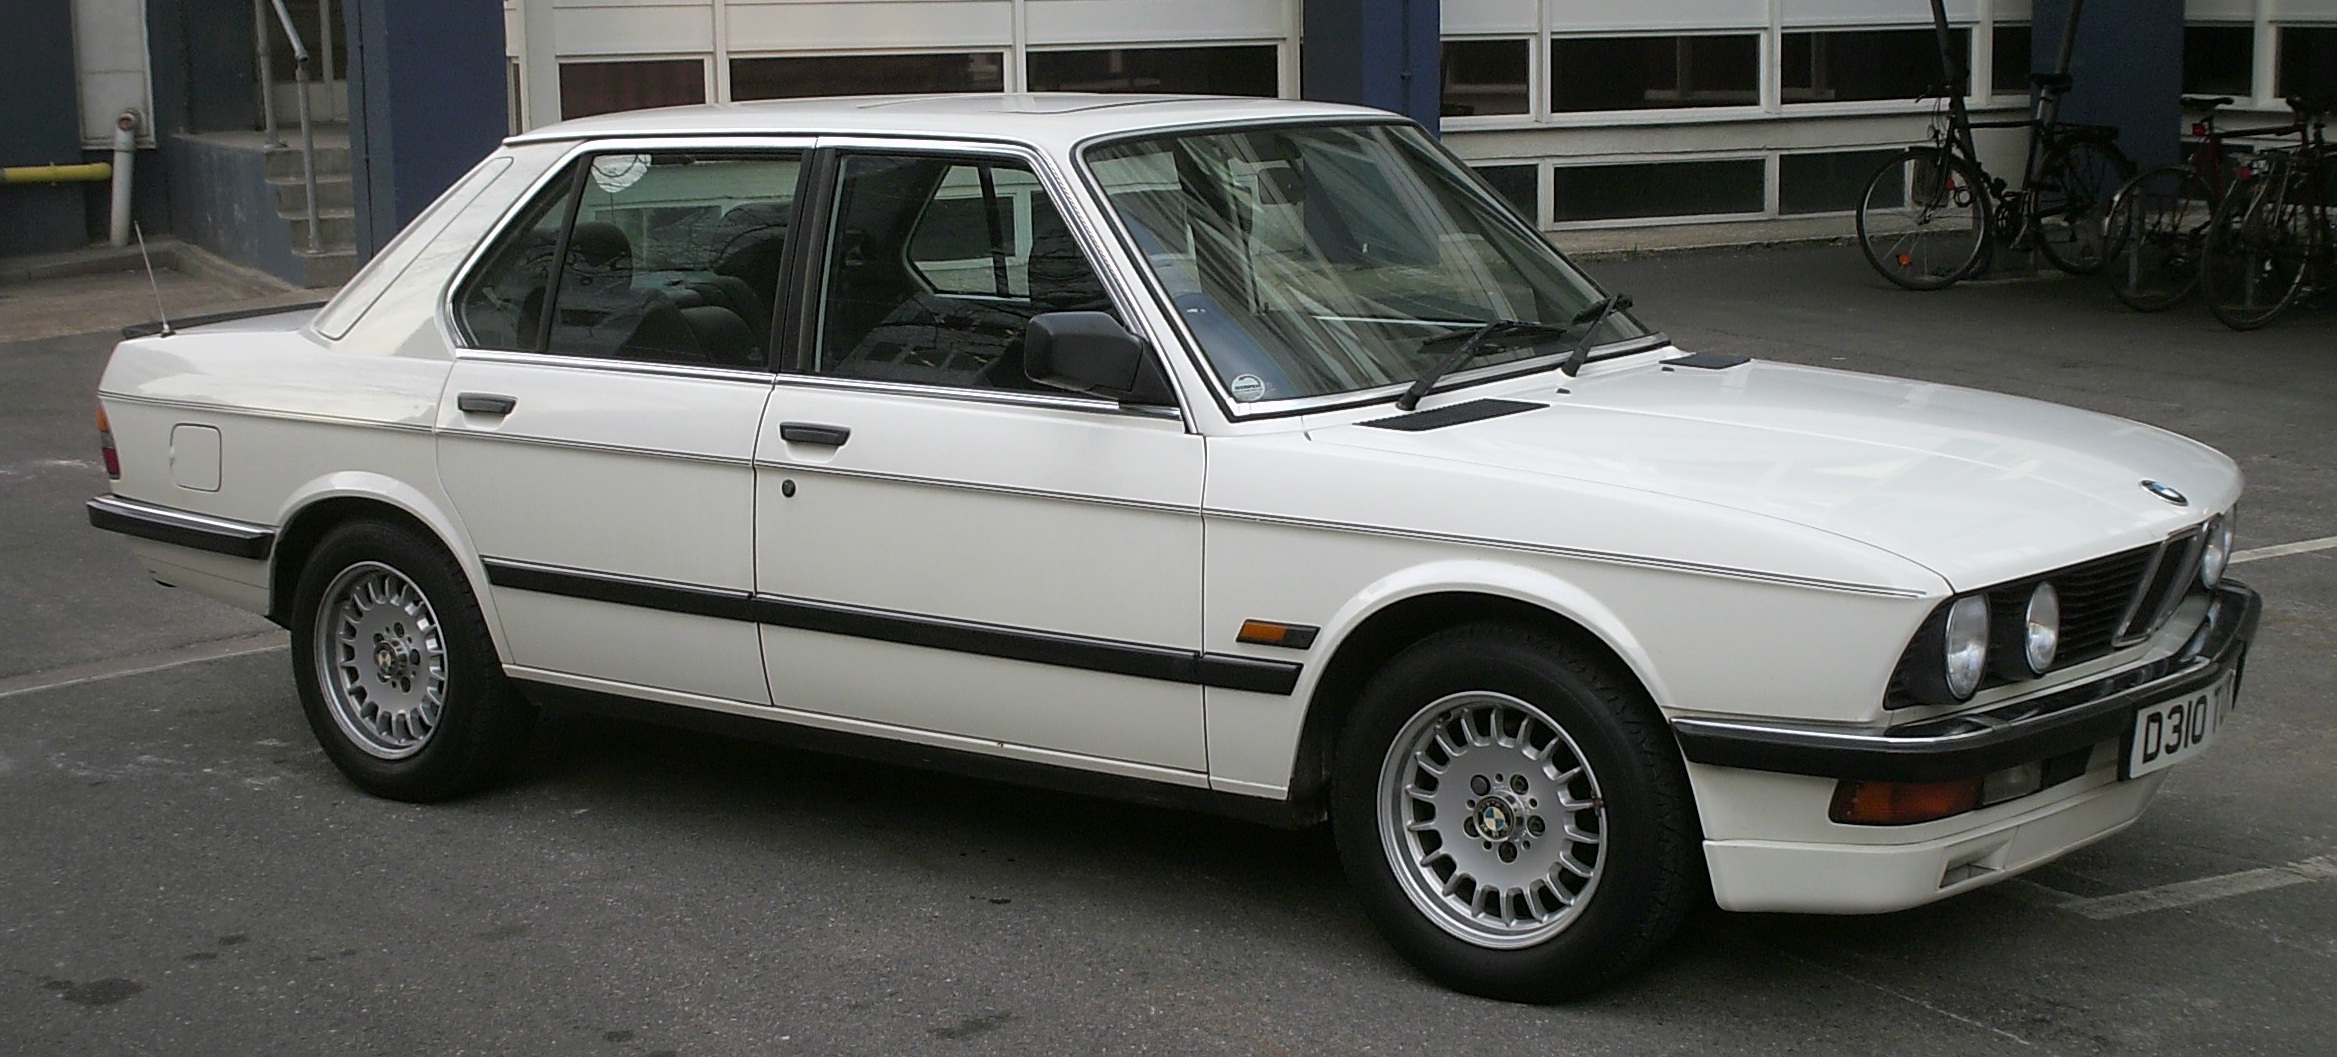 BMW_520i_F28.jpg